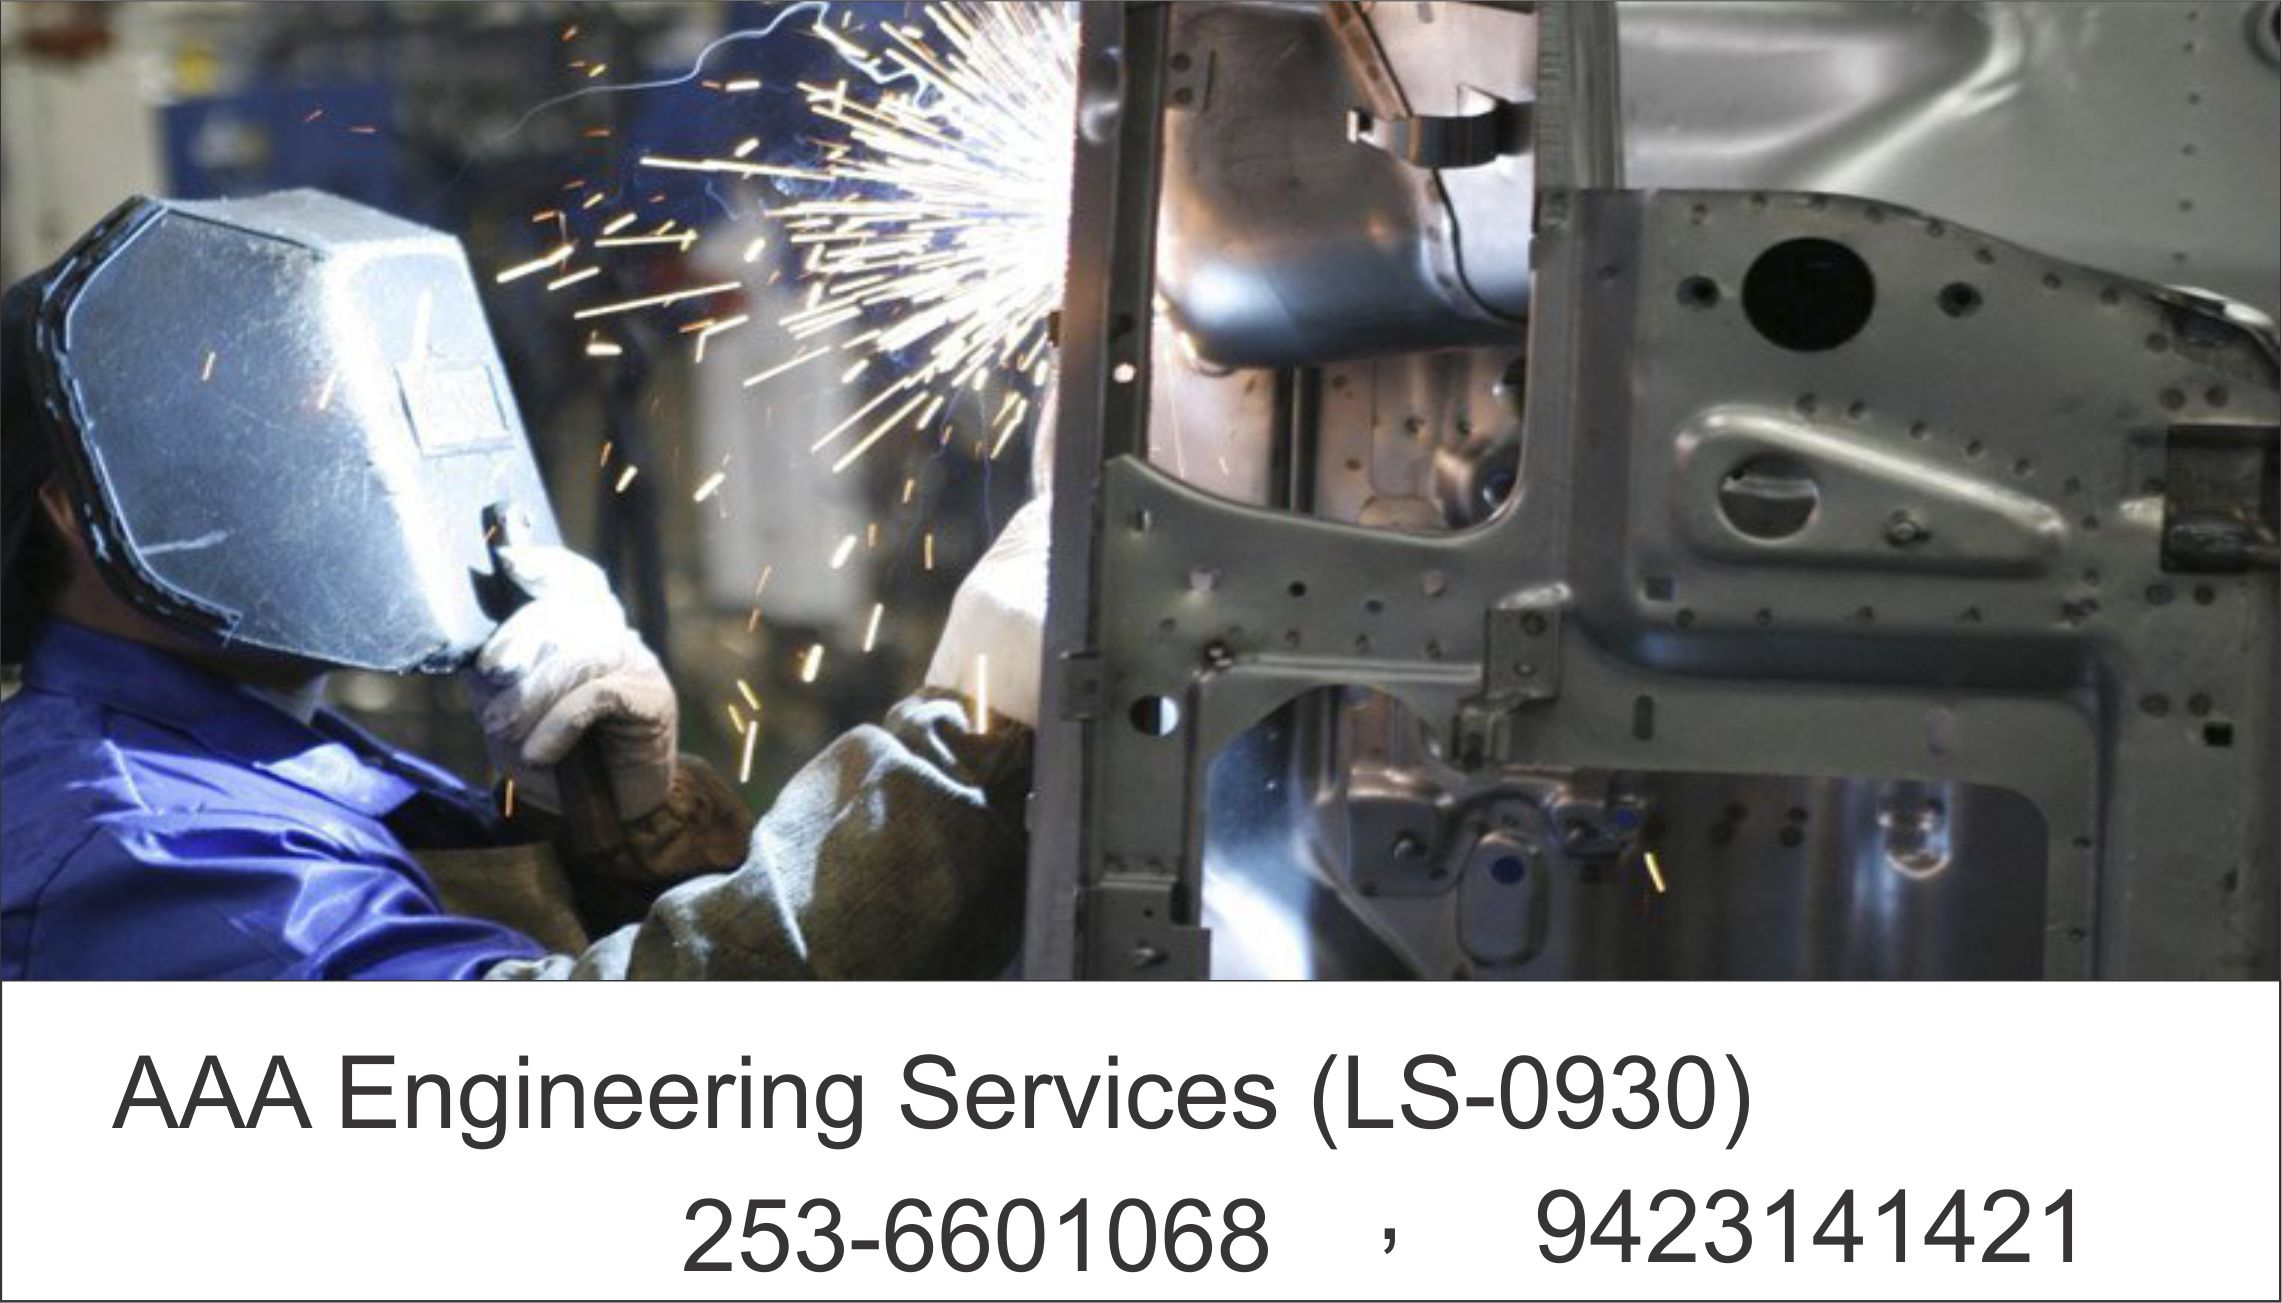 AAA Engineering Services